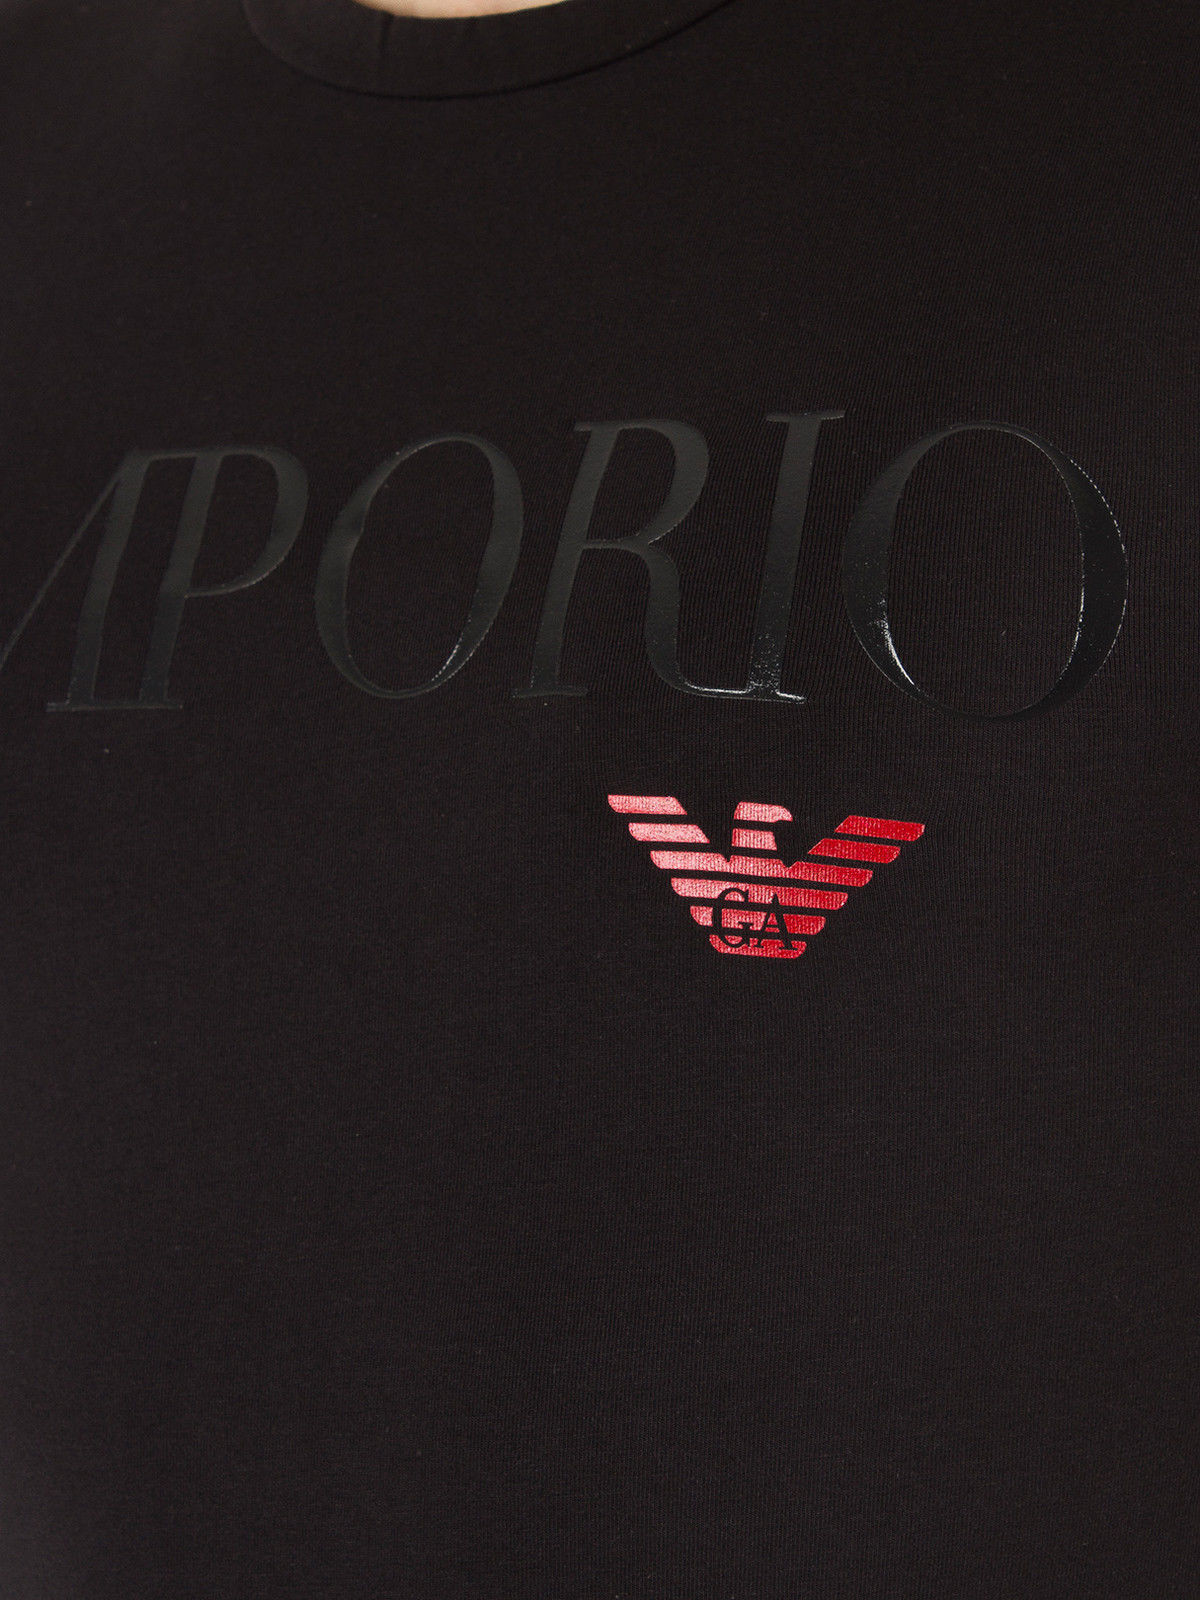 Emporio Armani Black Men's T-Shirt Glossy logo, Size M*L*XL New Emporio Armani 8N1T991JPZZ - фотография #3